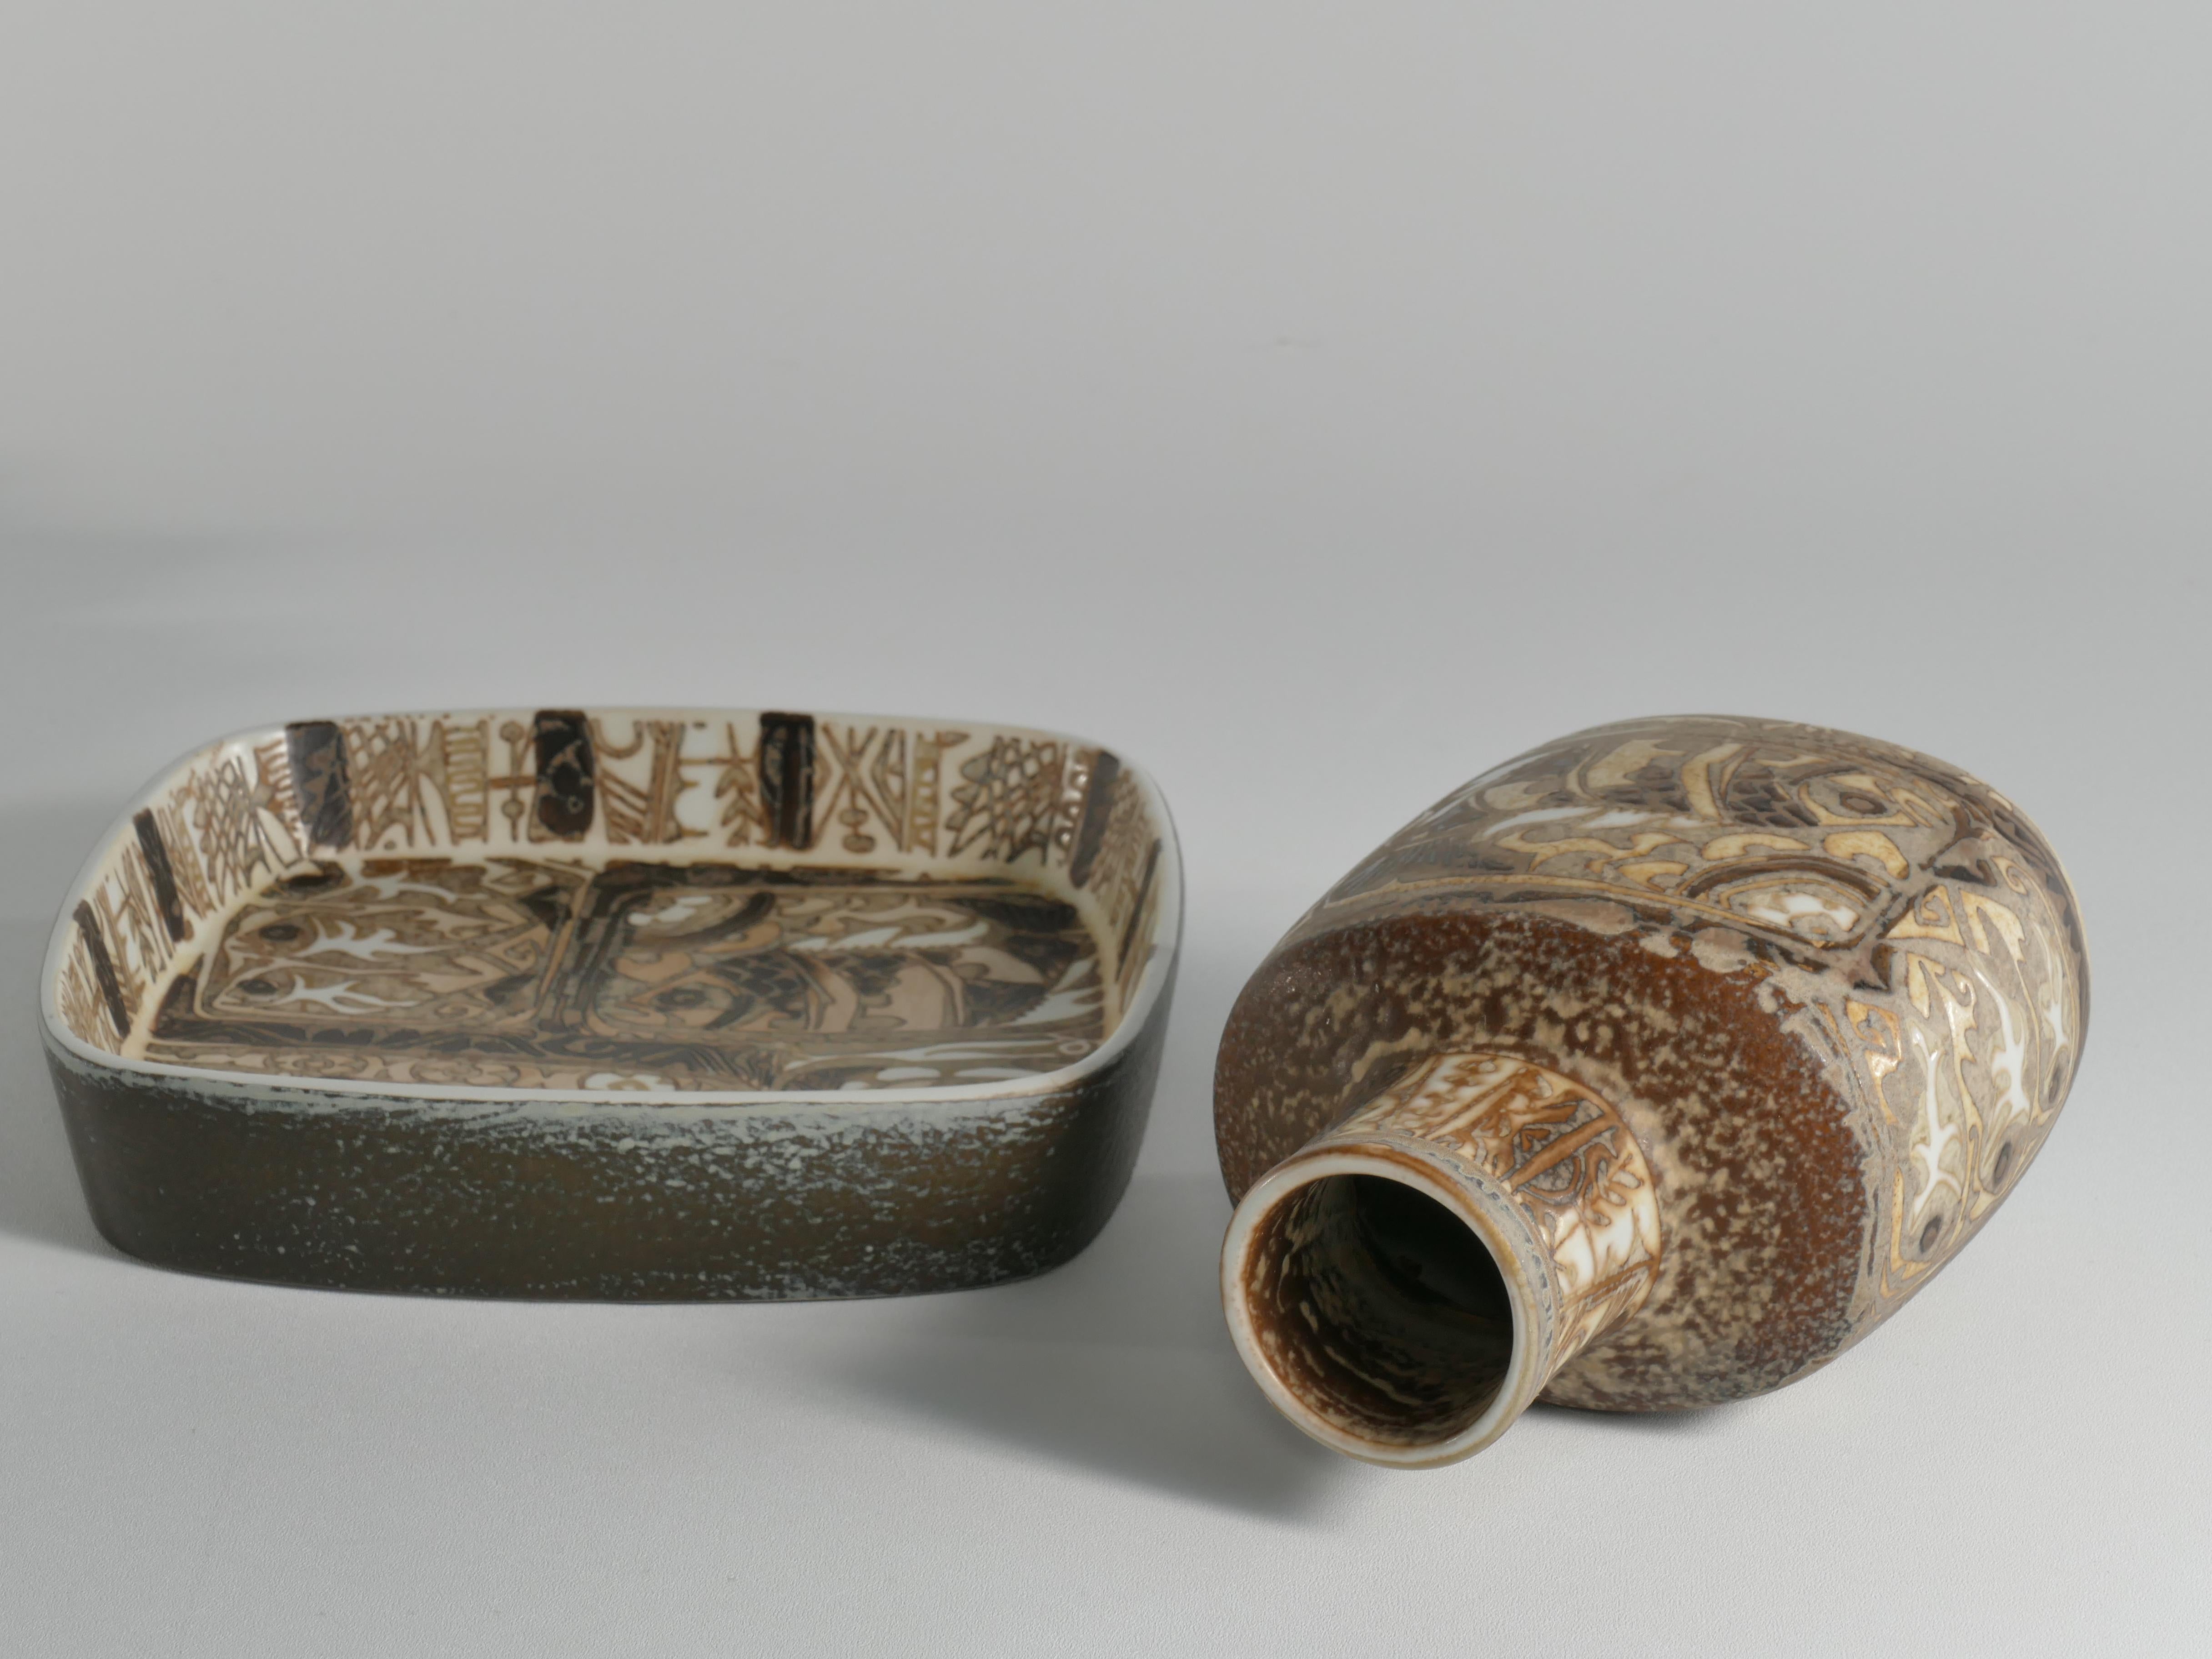 Scandinavian Modern Plate and Vase, ceramic, 